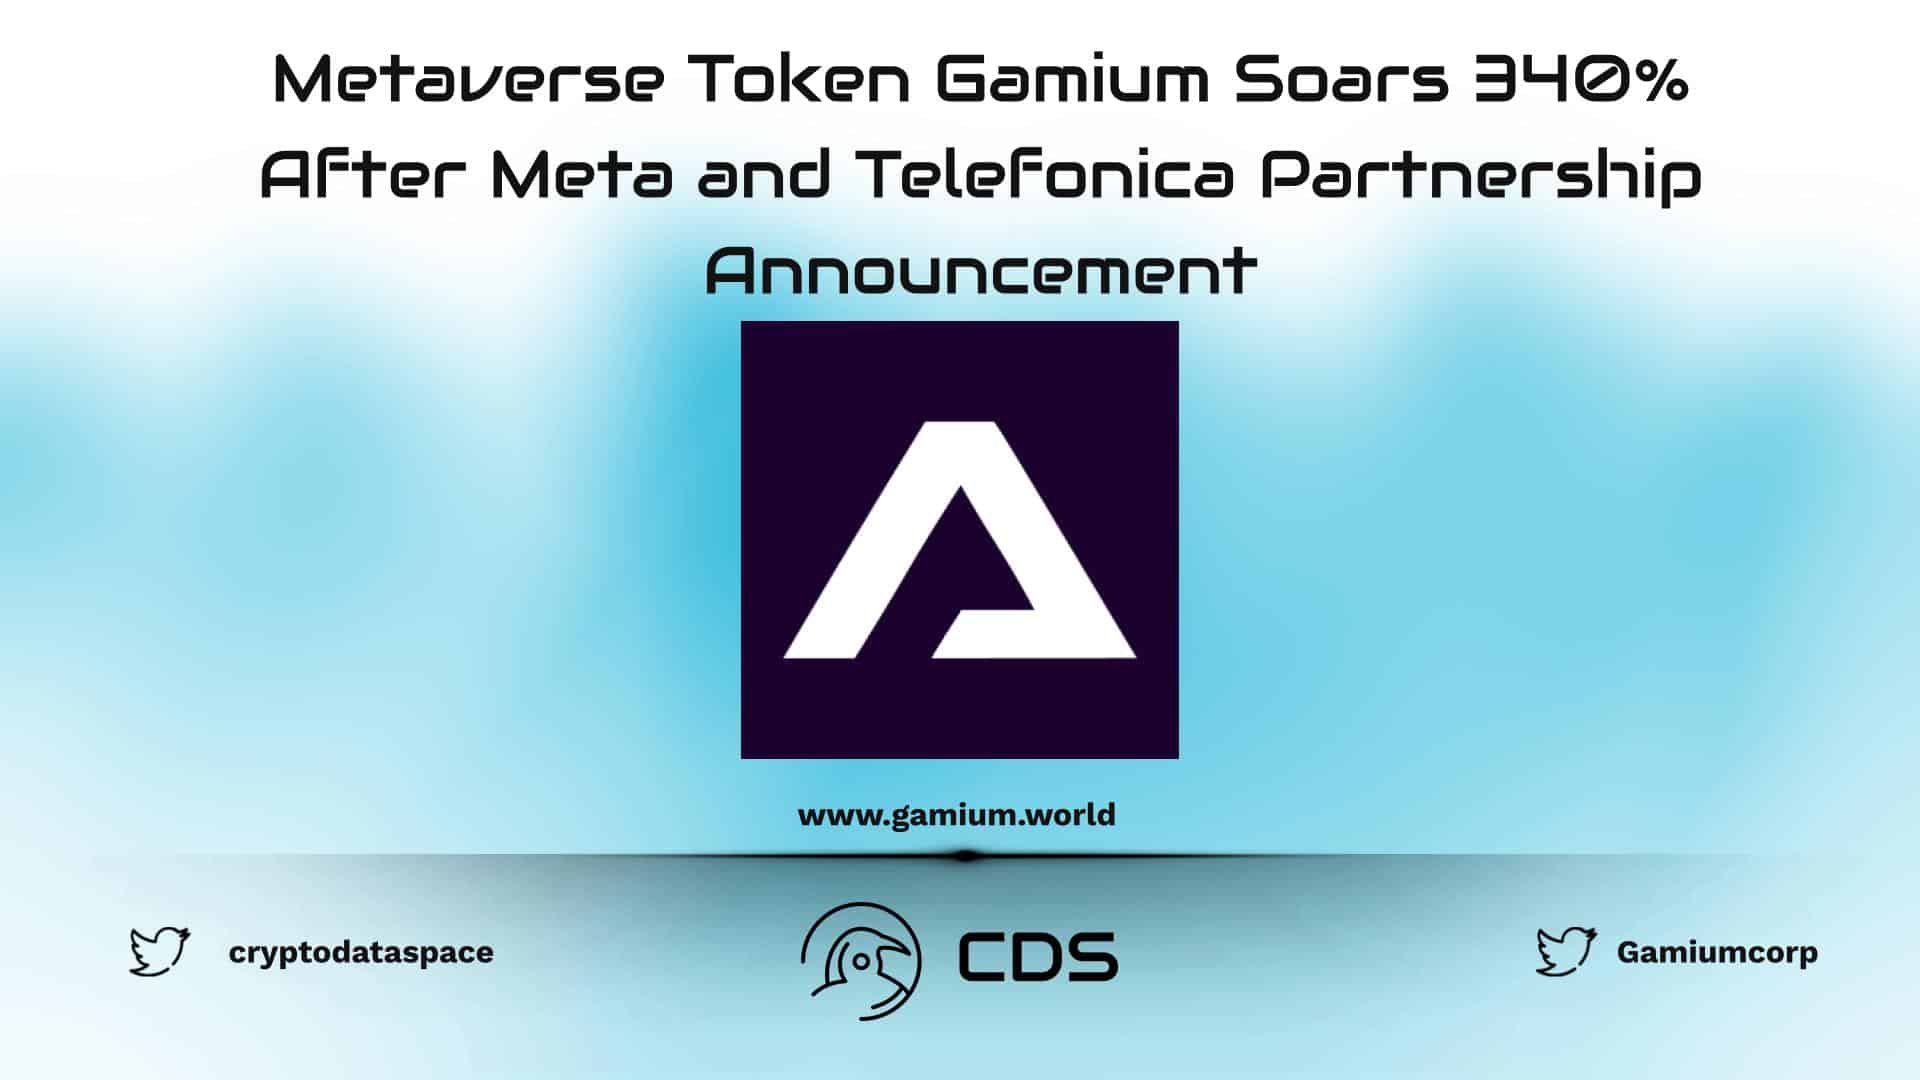 Metaverse Token Gamium Soars 340% After Meta and Telefonica Partnership Announcement